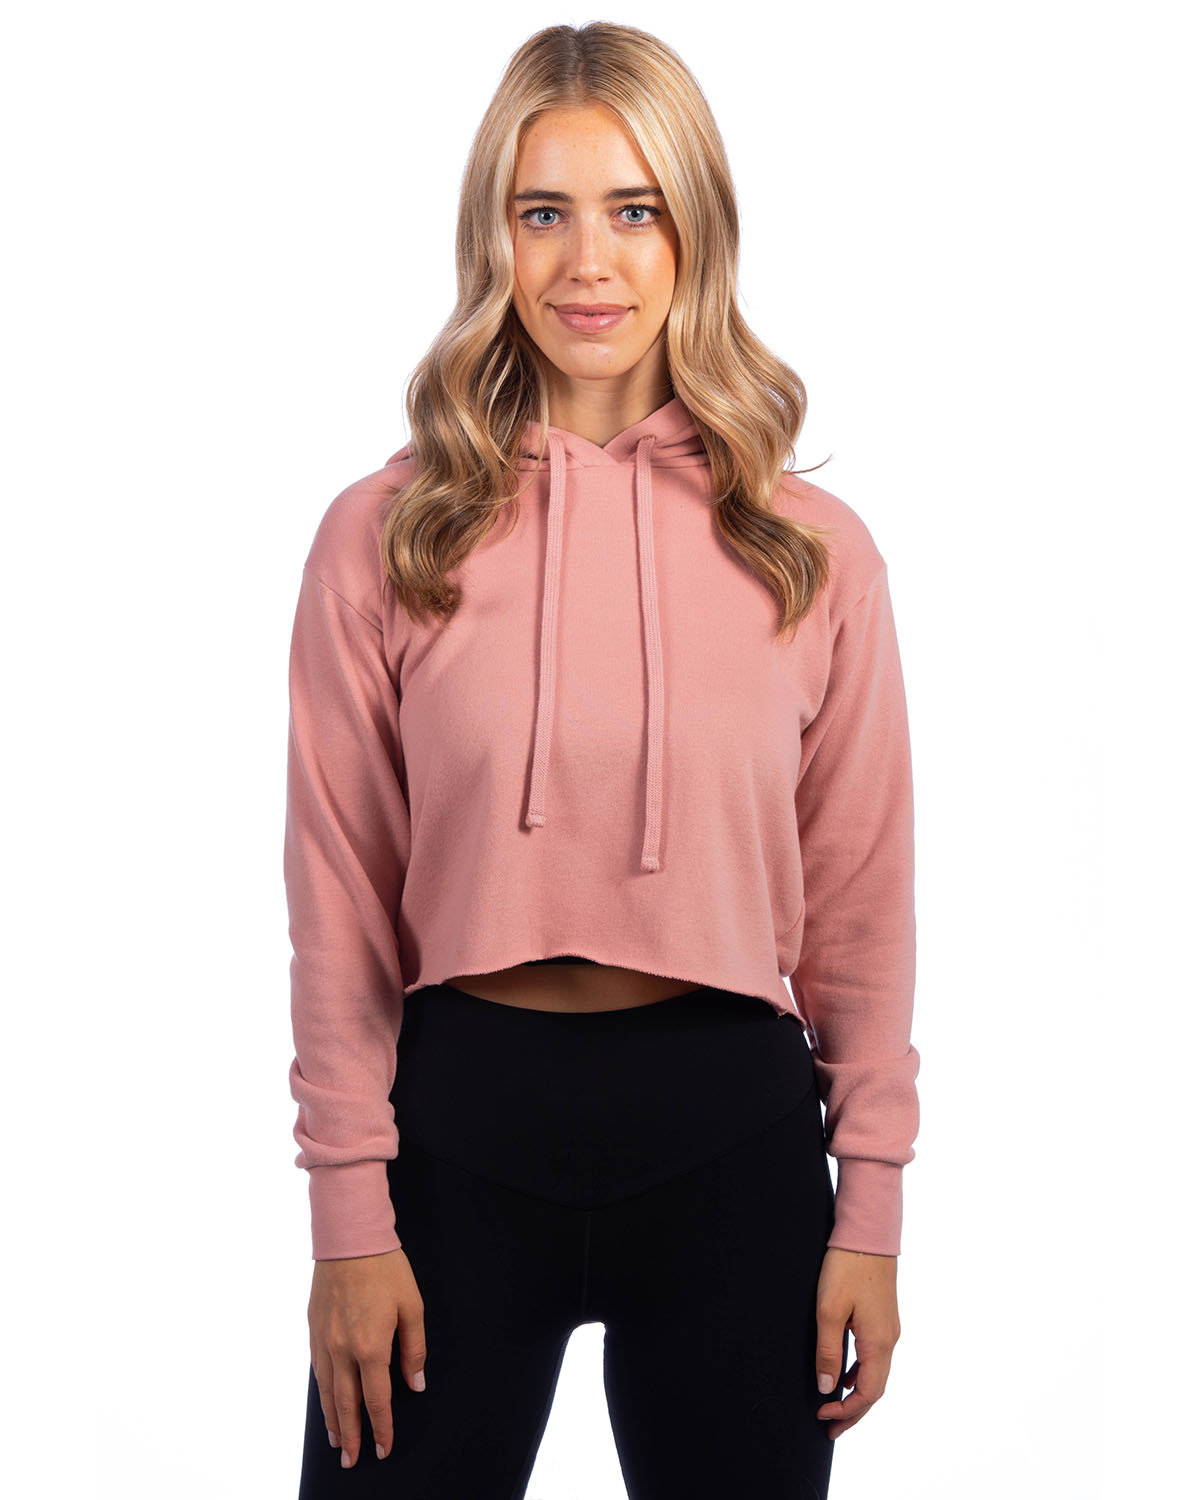 Next Level Ladies' Cropped Pullover Hooded Sweatshirt DESERT PINK 